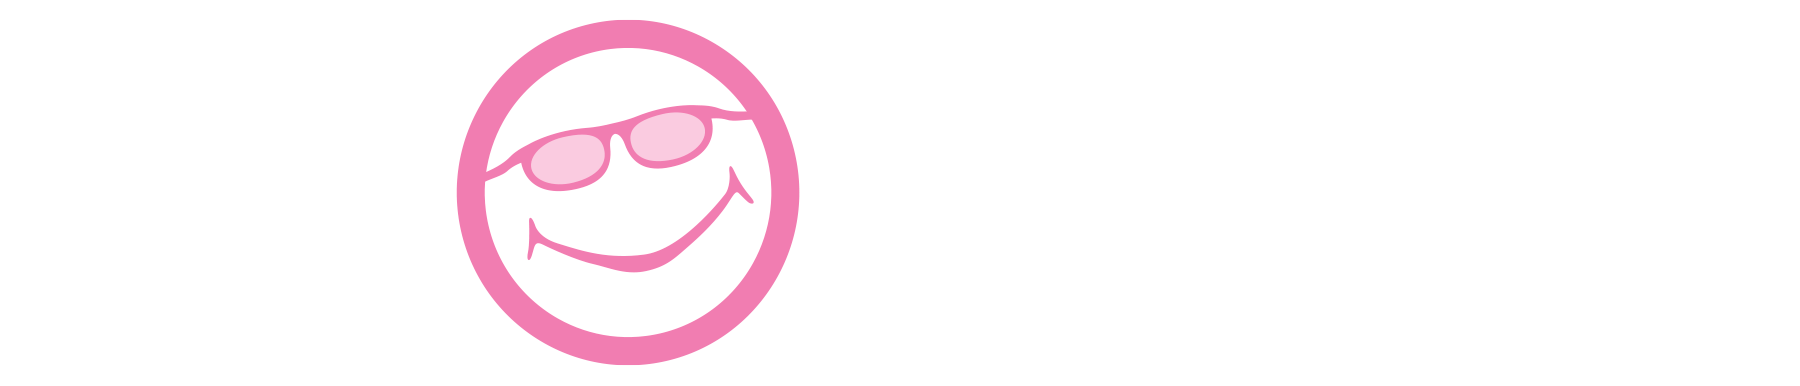 Neotech logo